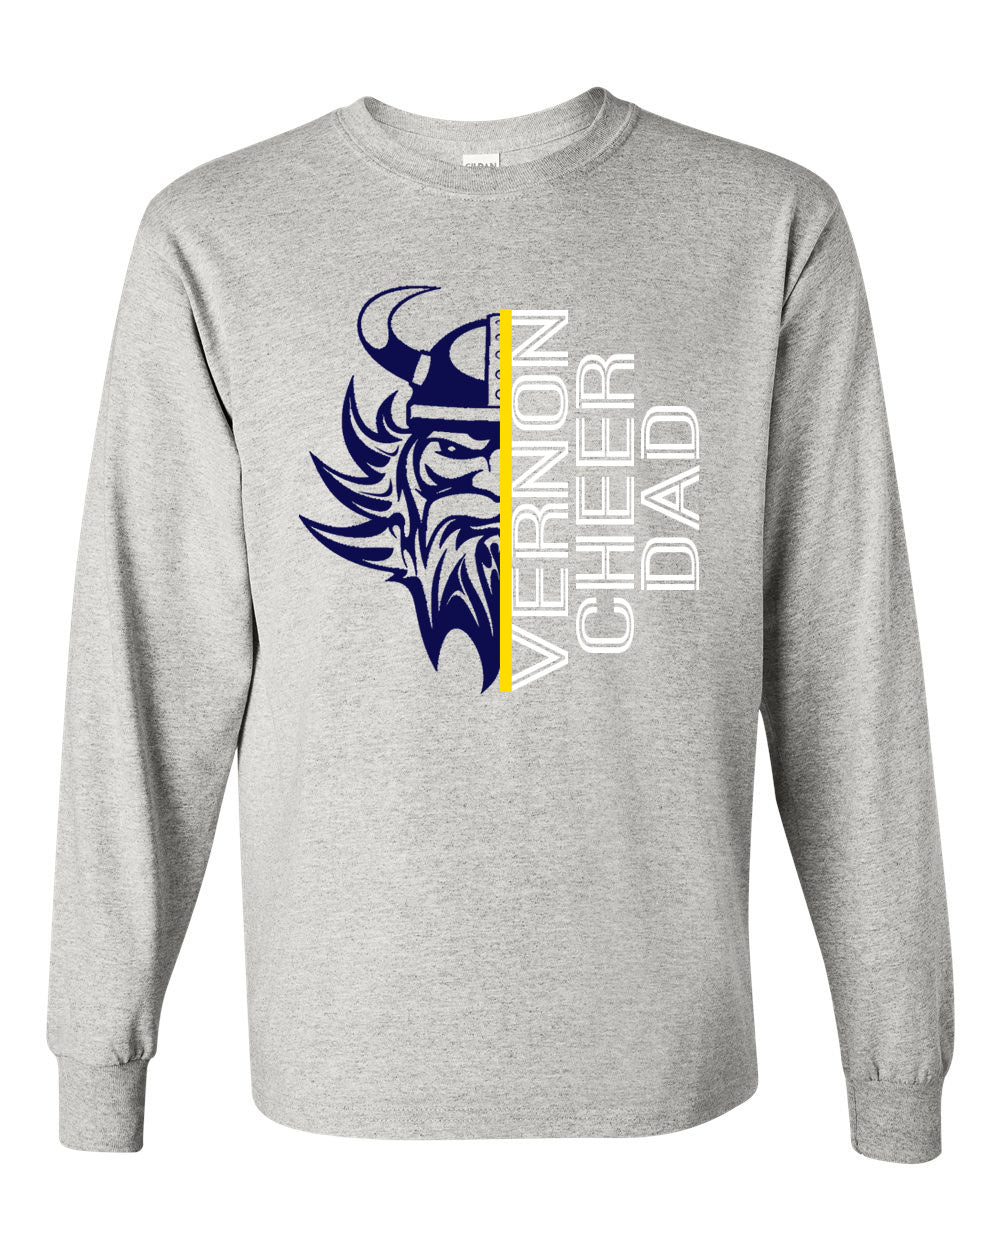 Vikings Cheer Design 10 Long Sleeve Shirt